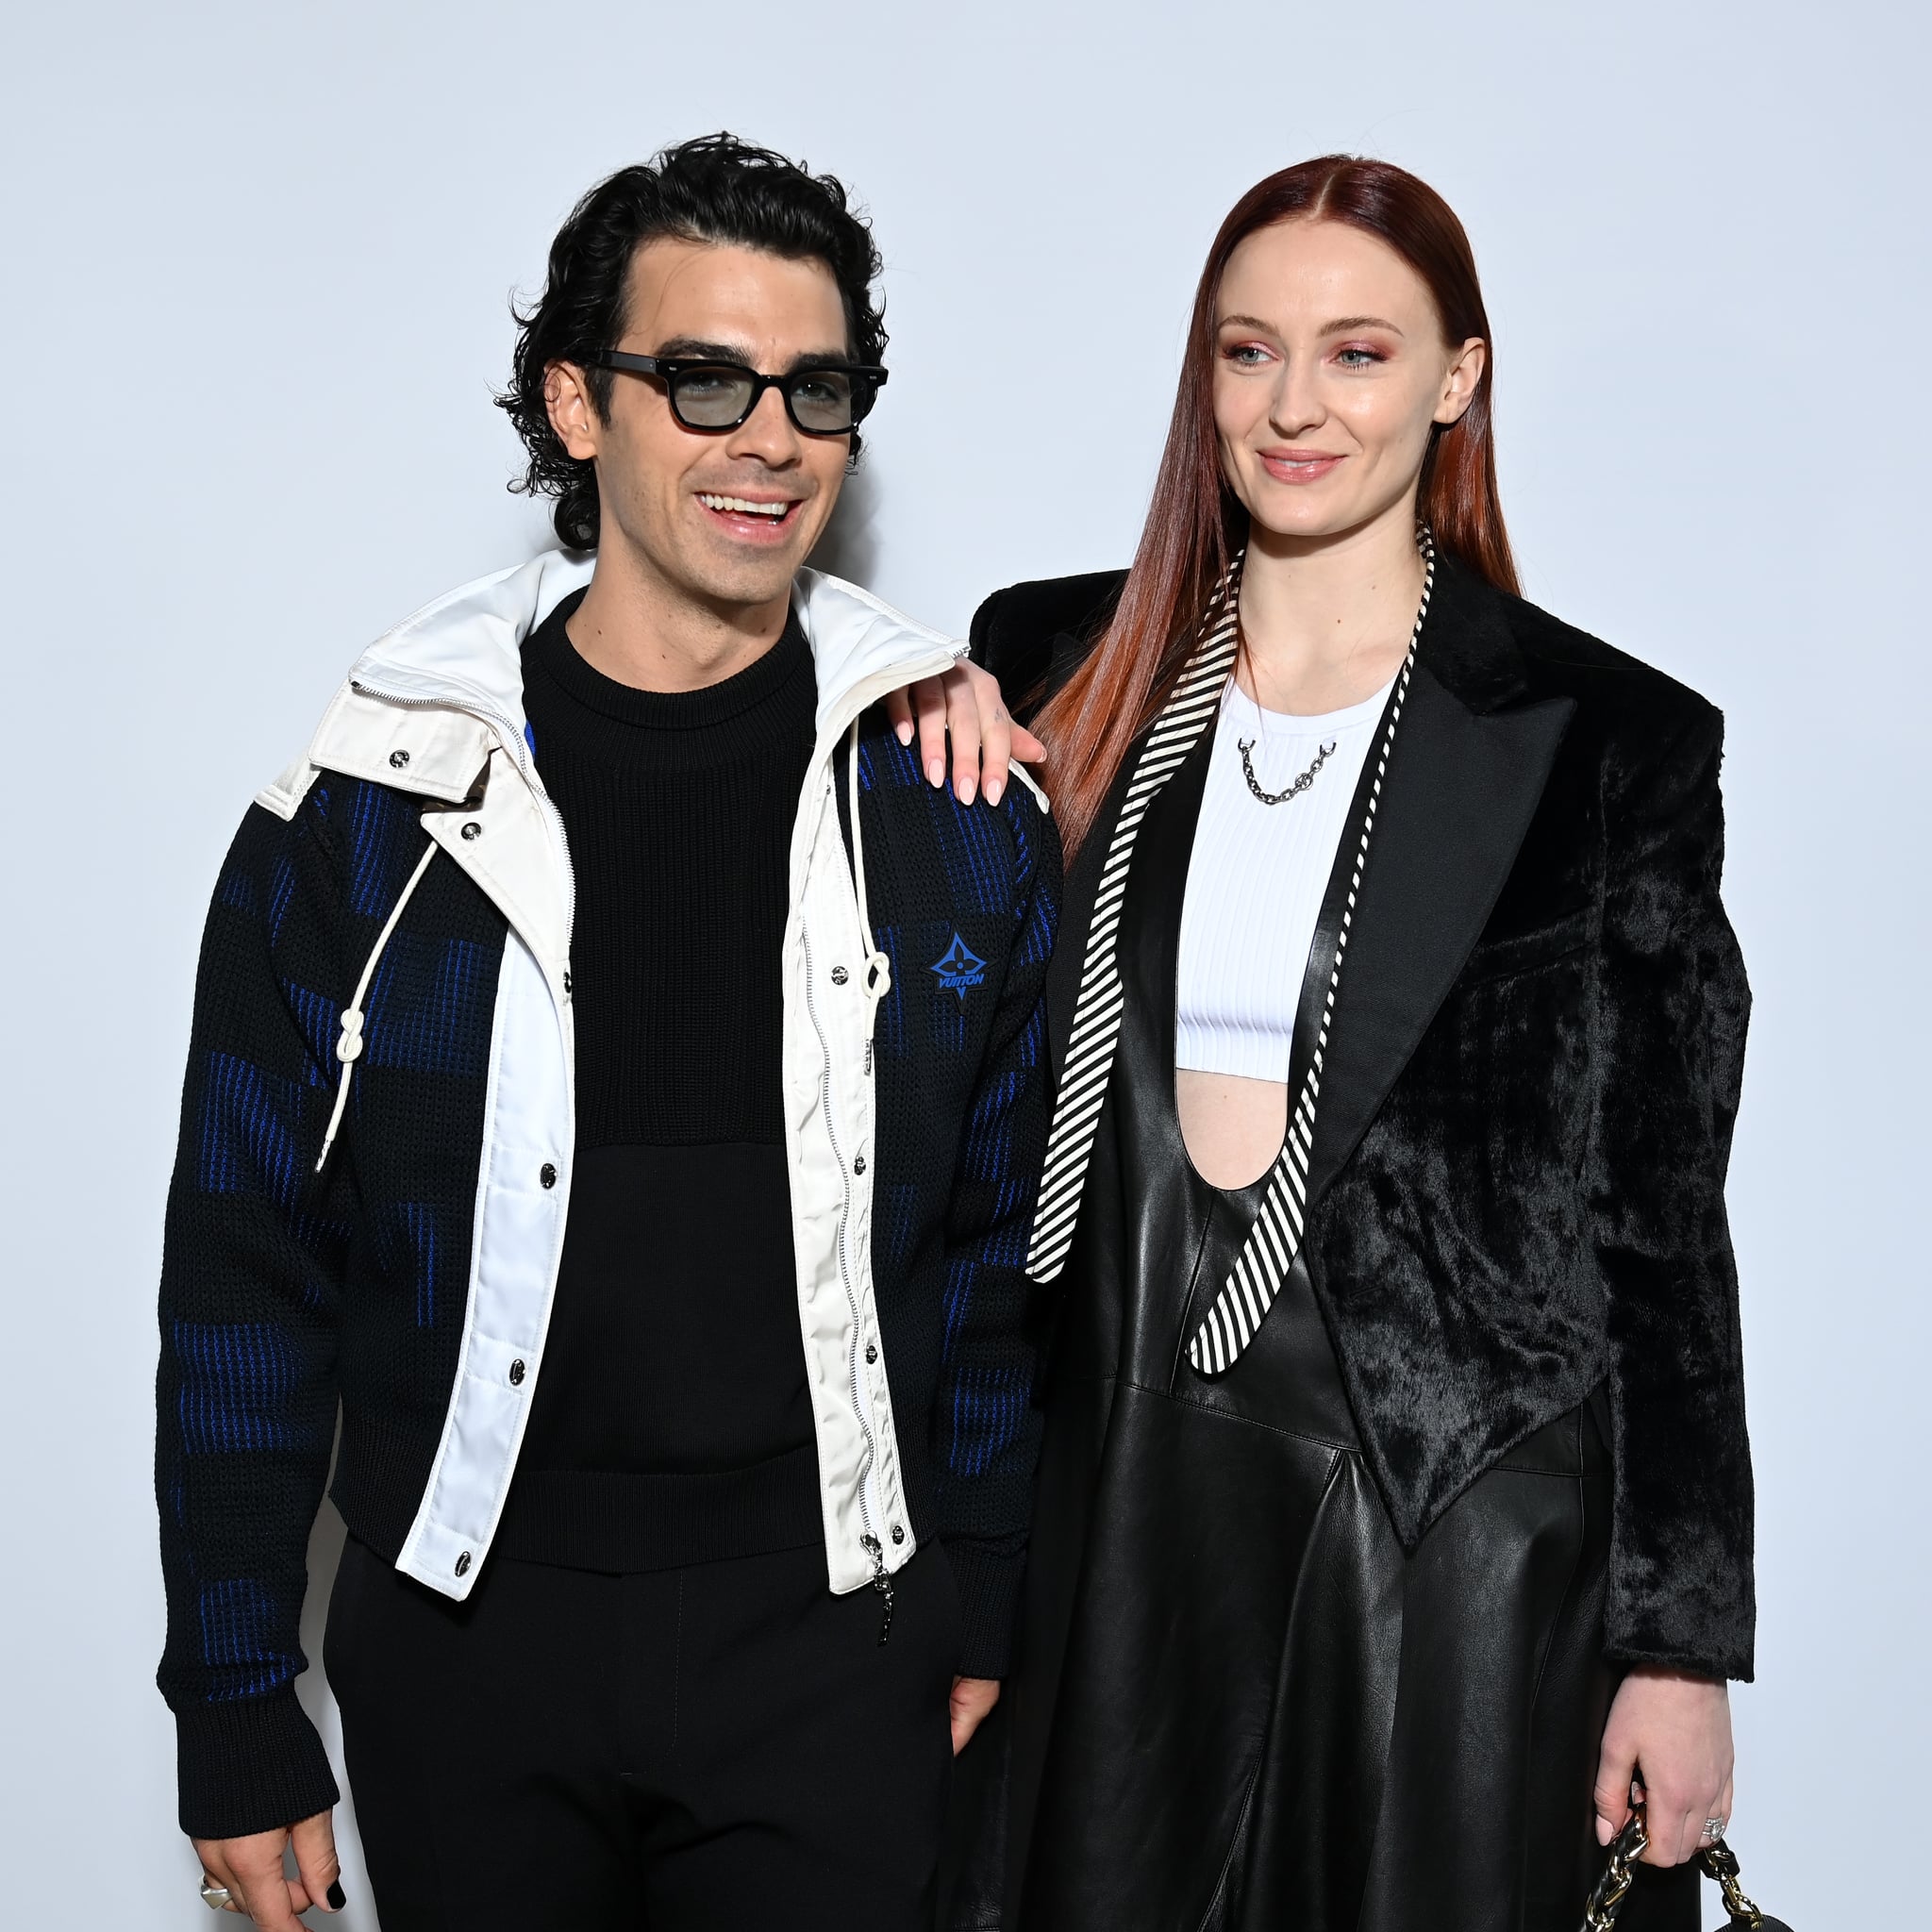 Surreal Louis Vuitton Pop-Up Opens in Sydney